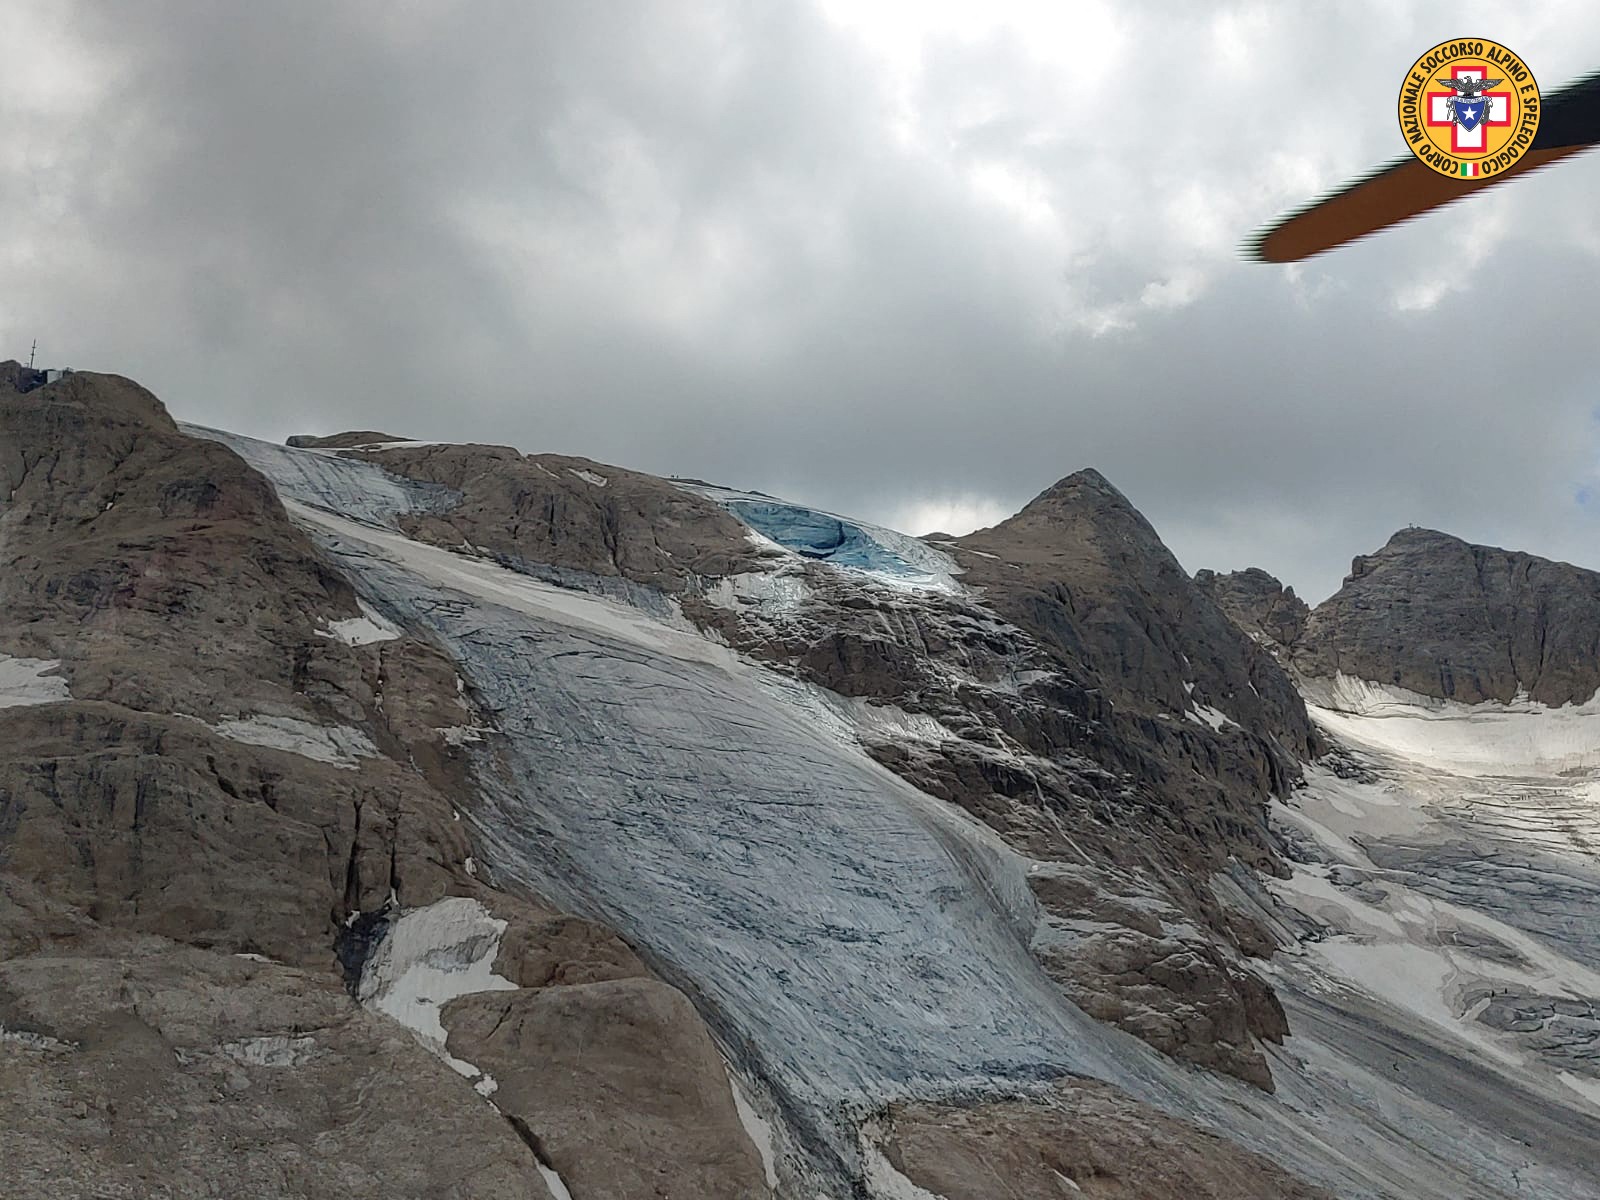 Rompimento de geleira deixou mortos e feridos nos Alpes italianos  — Foto: SOCCORSO ALPINO / AFP